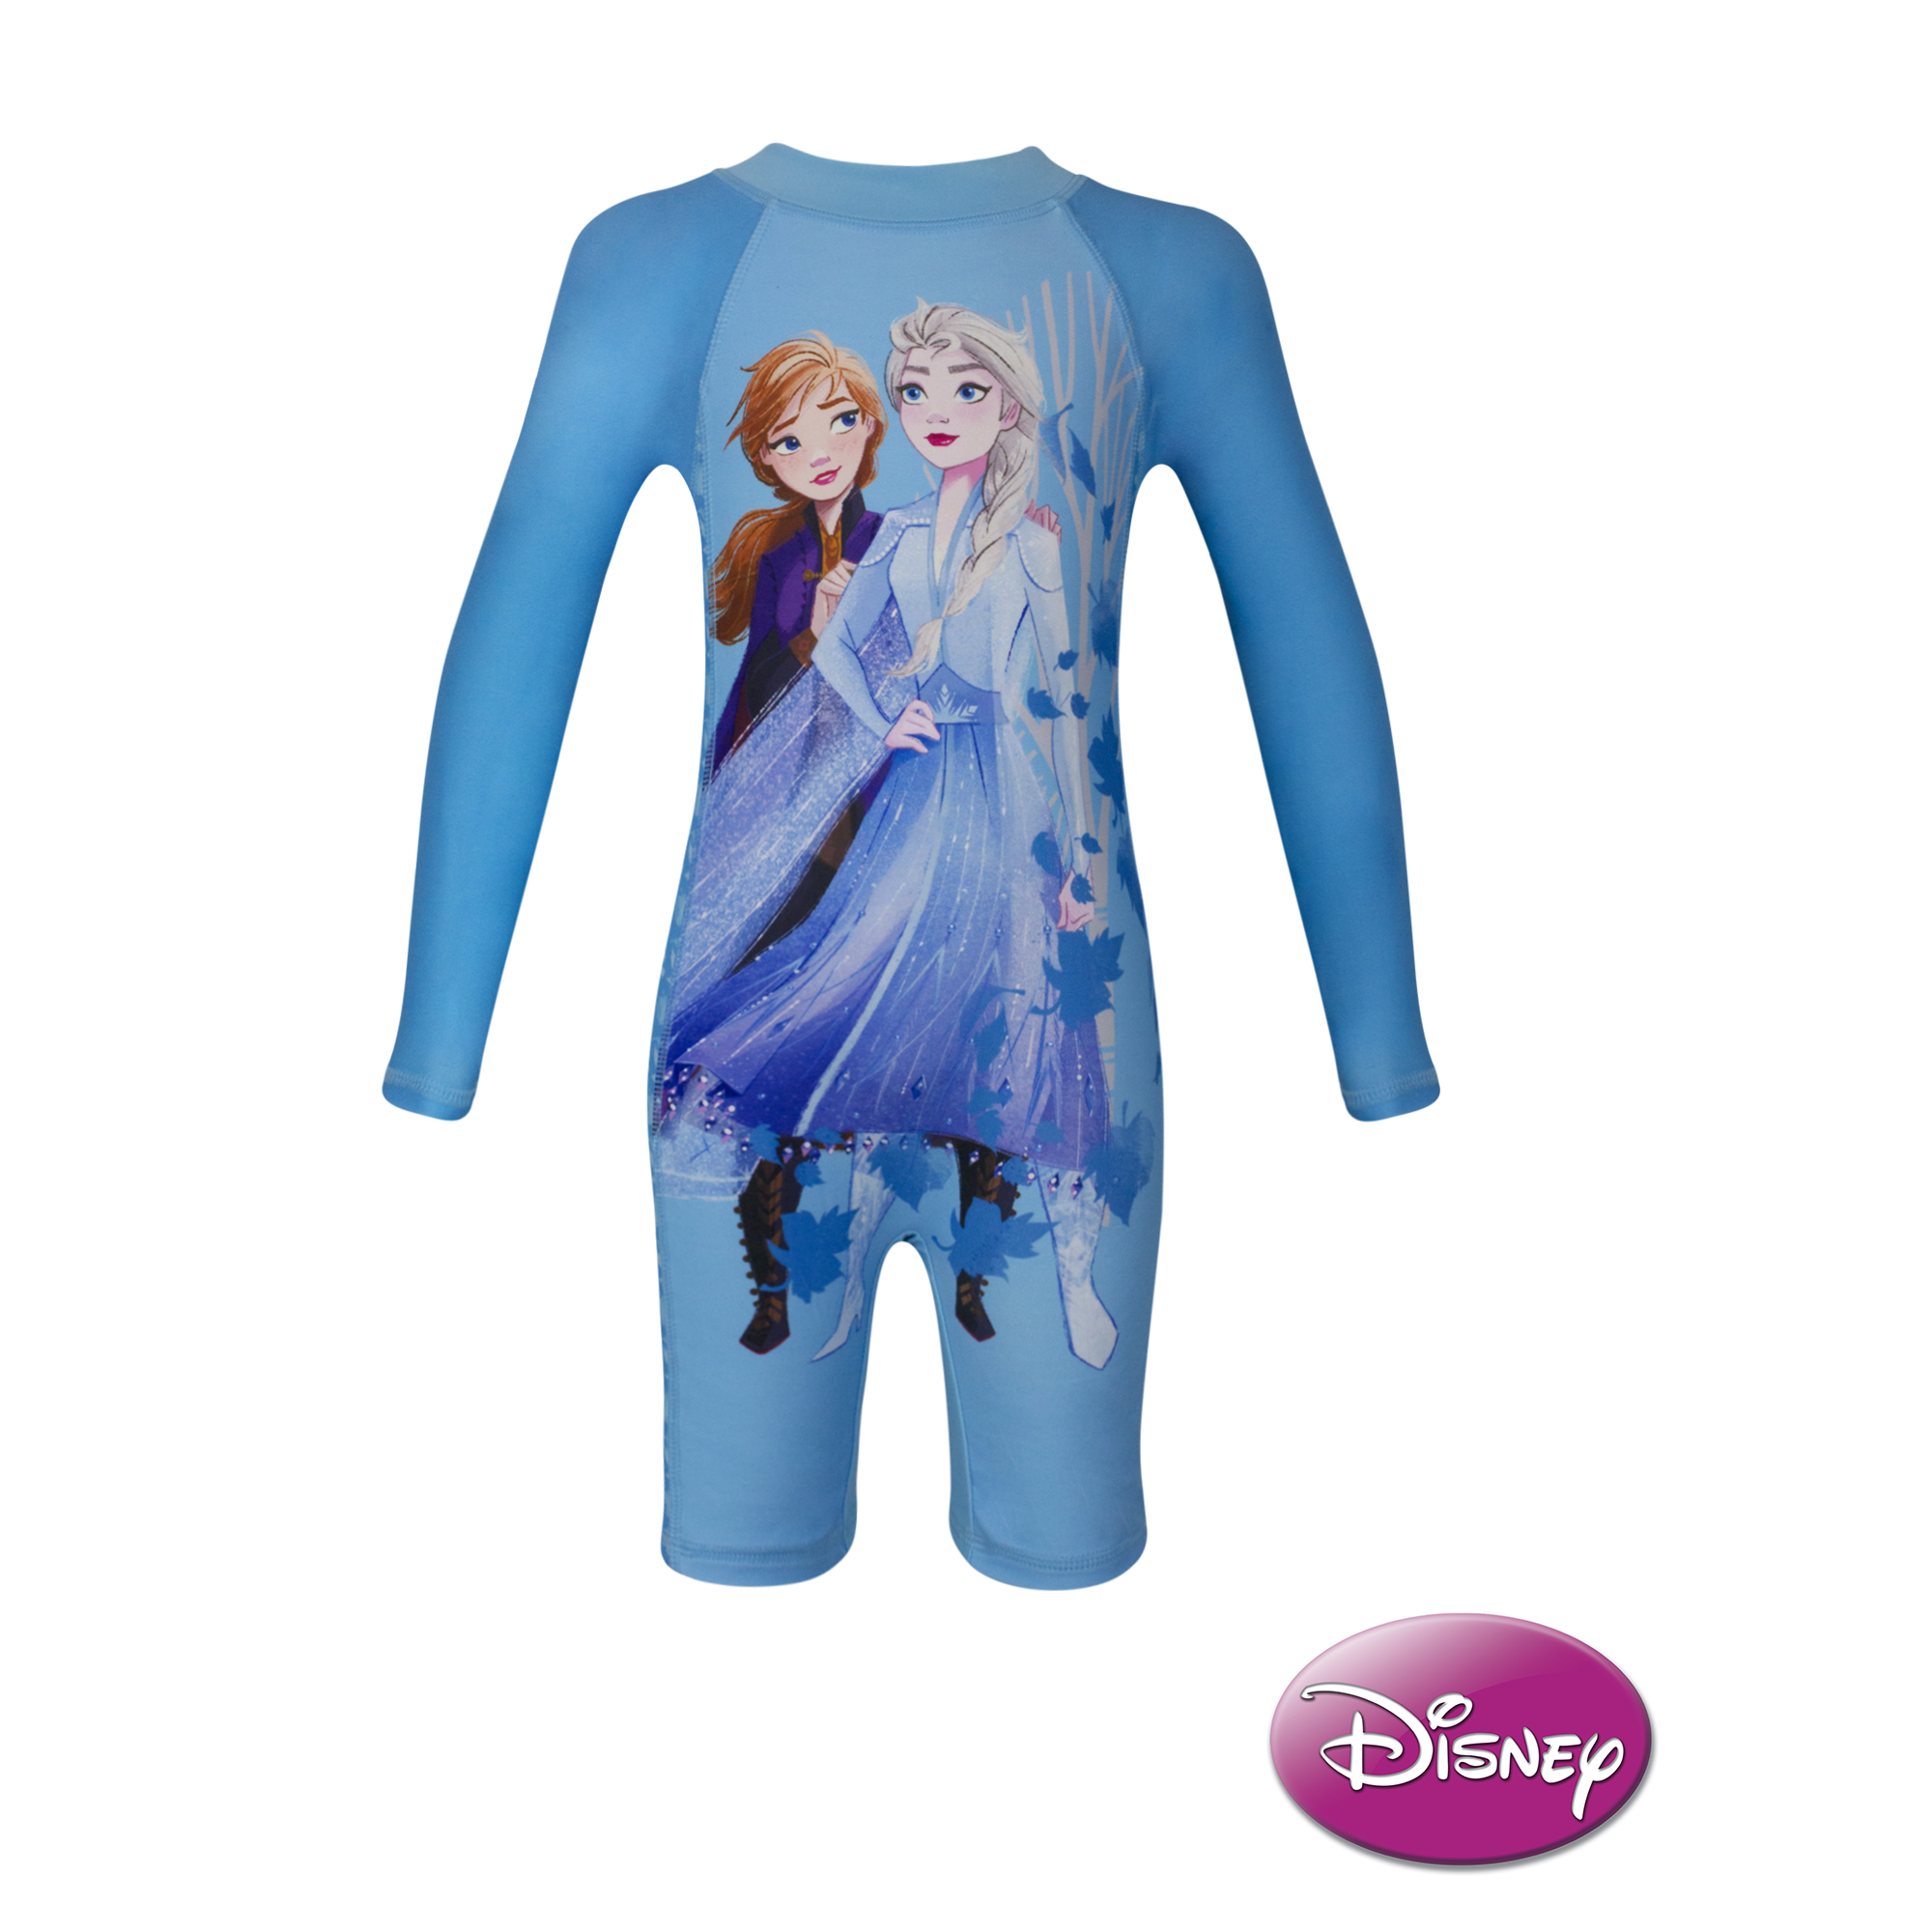 Disney Princess Elsa Frozen Girls Sky Blue Bodysuit Kids Swimsuit